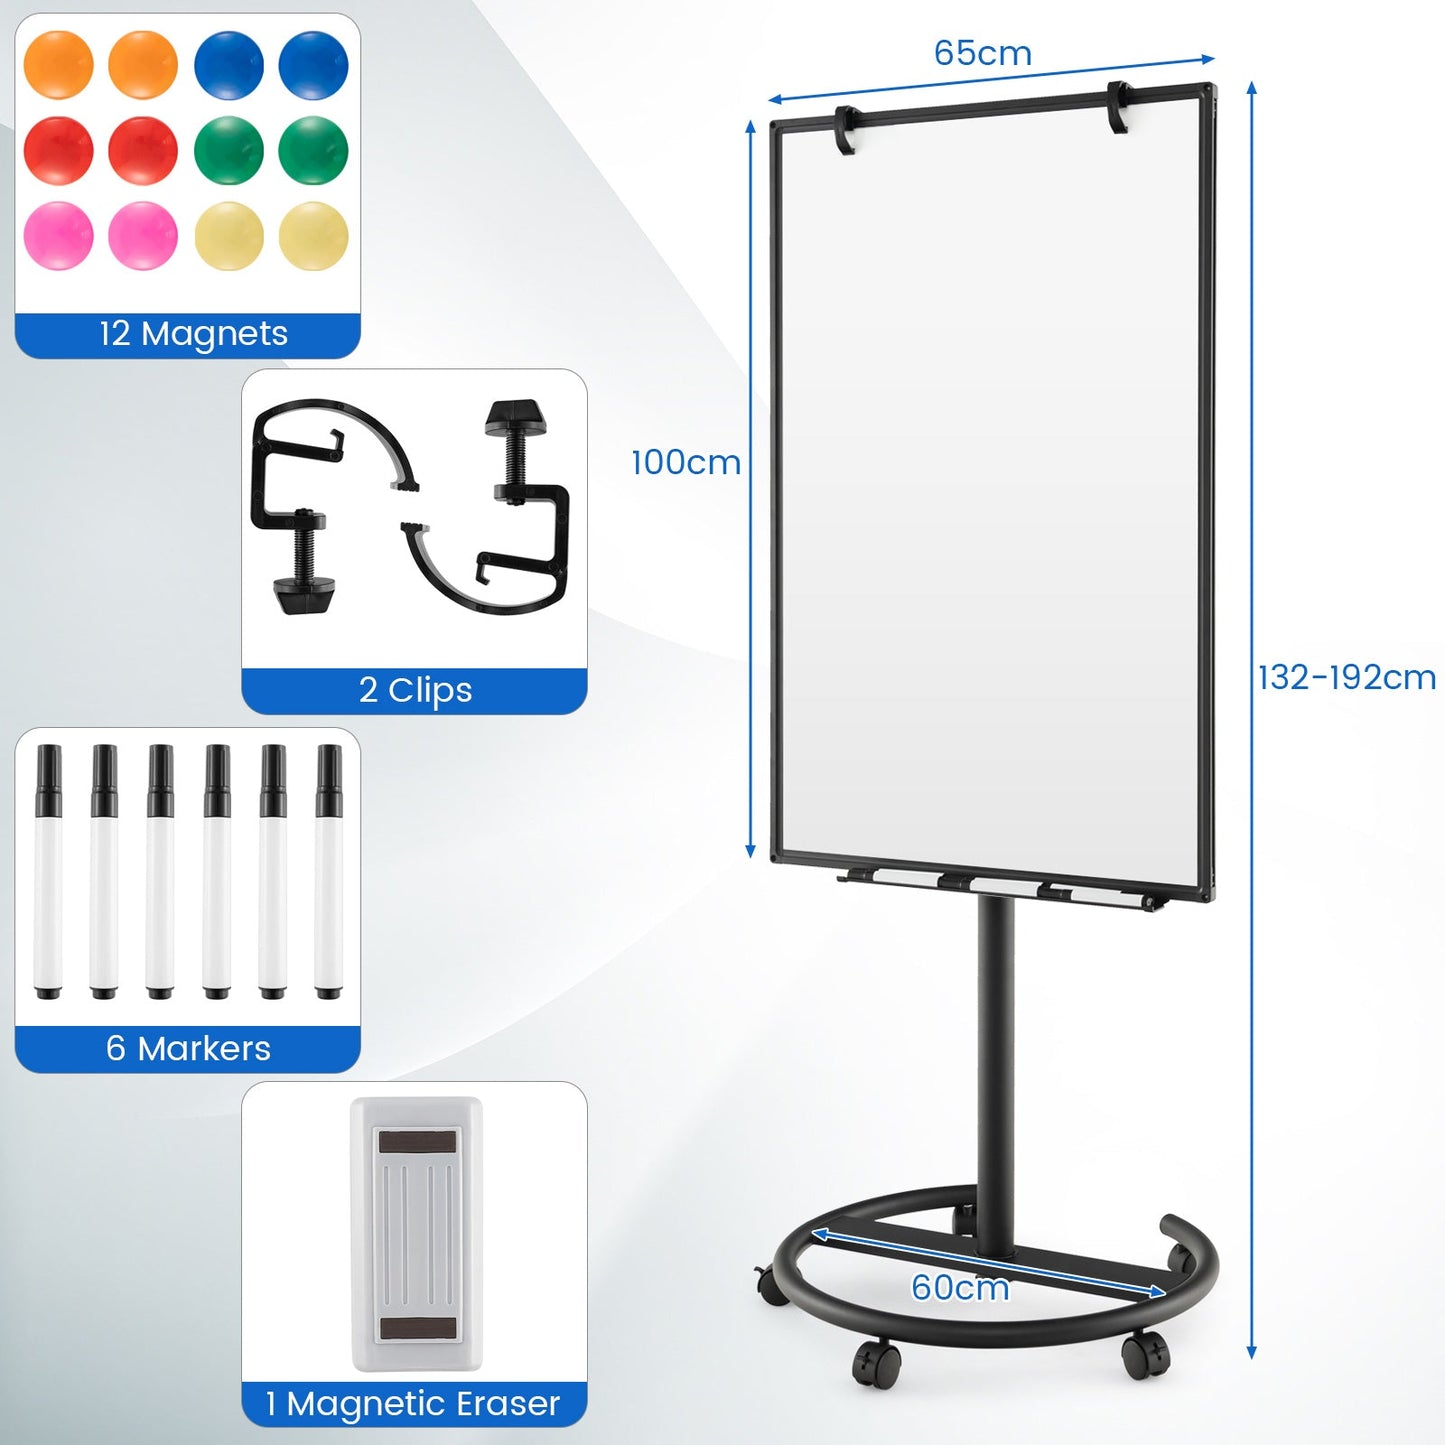 100 cm x 65 cm Height-Adjustable Magnetic Whiteboard on Wheels-Black &amp; White